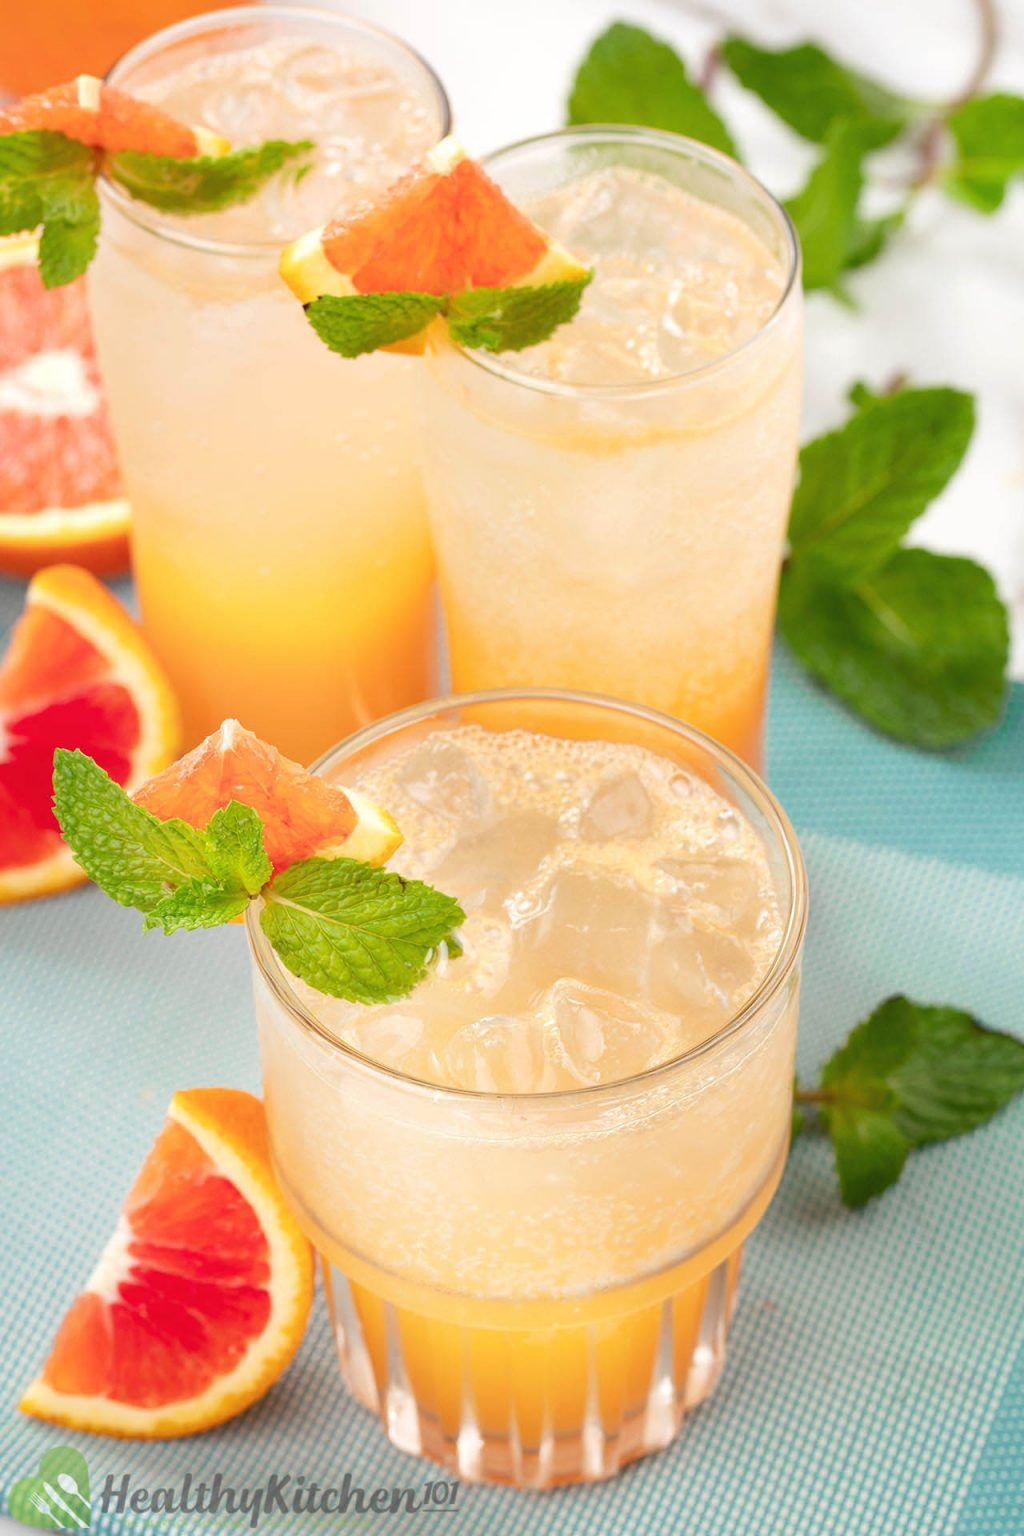 Grapefruit Juice Recipes - Top 10 Recipes for Quick Weight LOSS